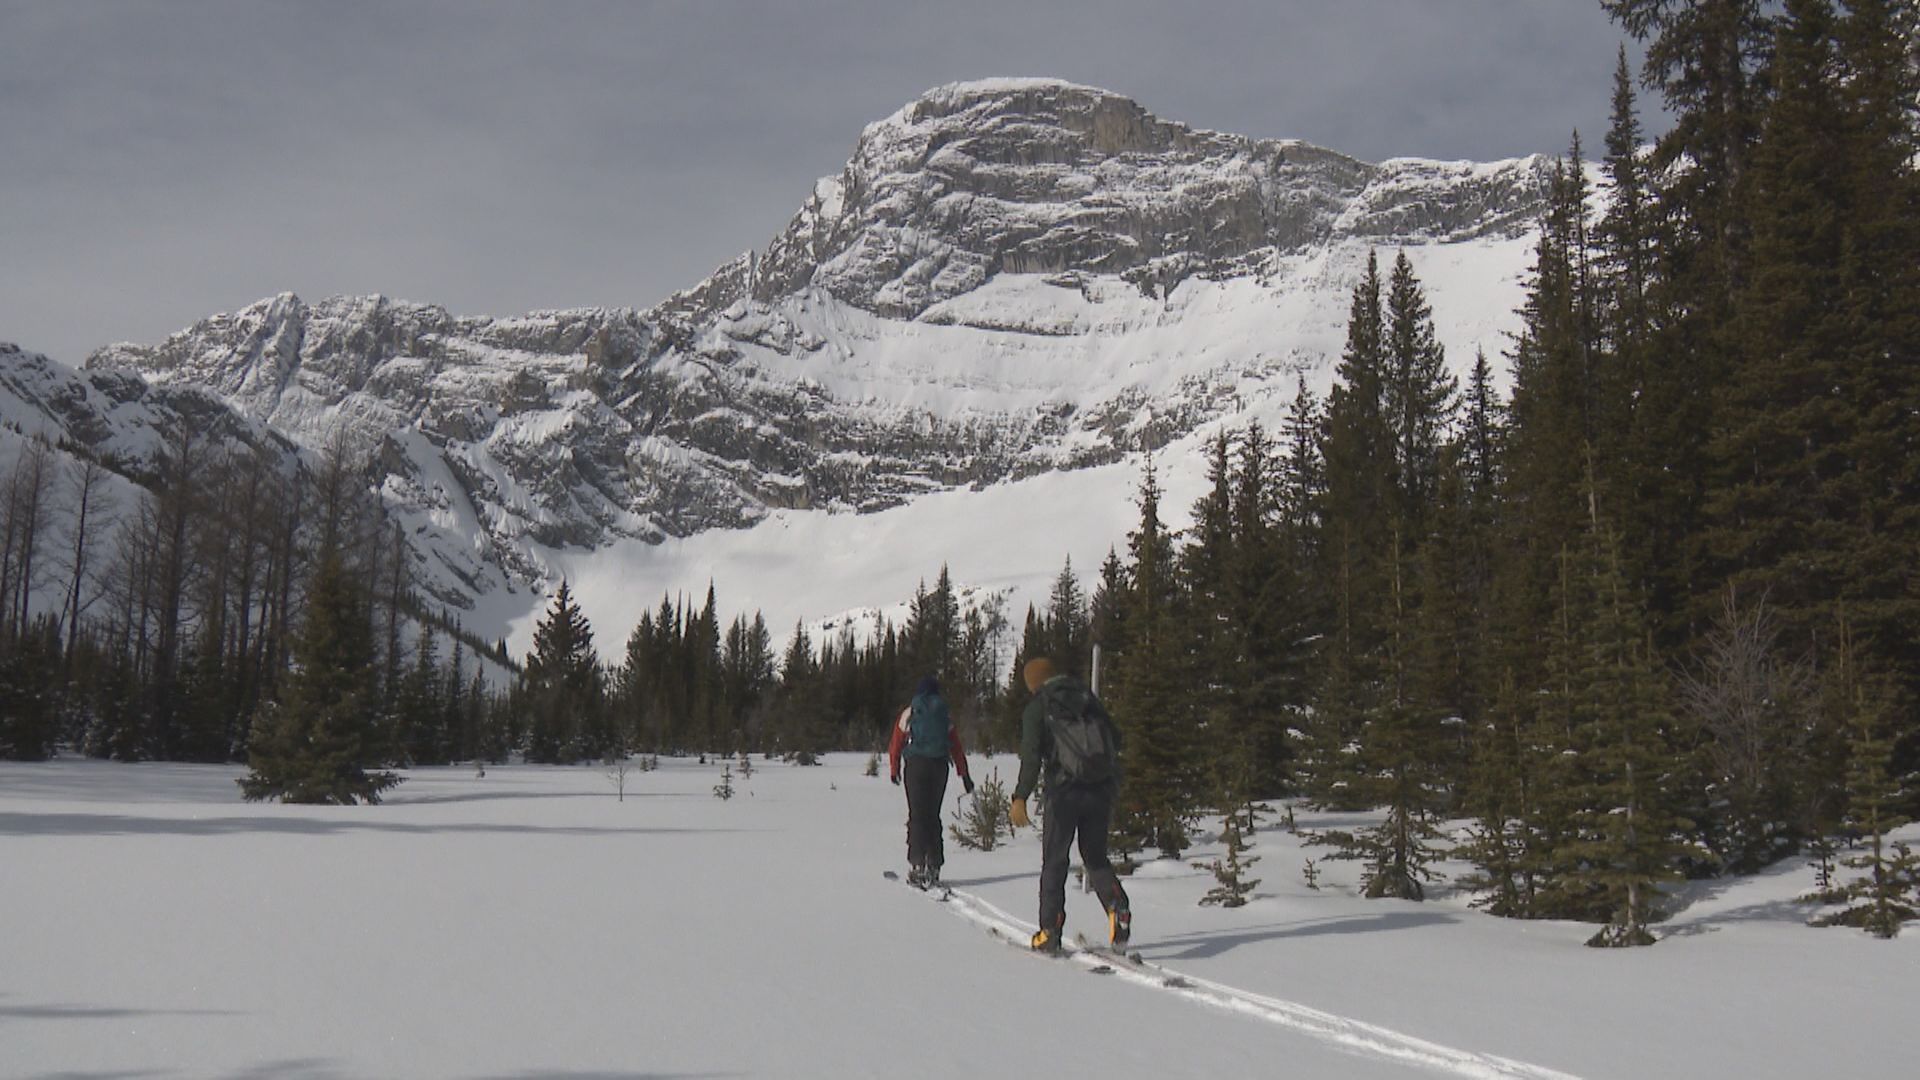 Rocky Mountains’ snowpack levels still 20% below normal: Alberta
Environment